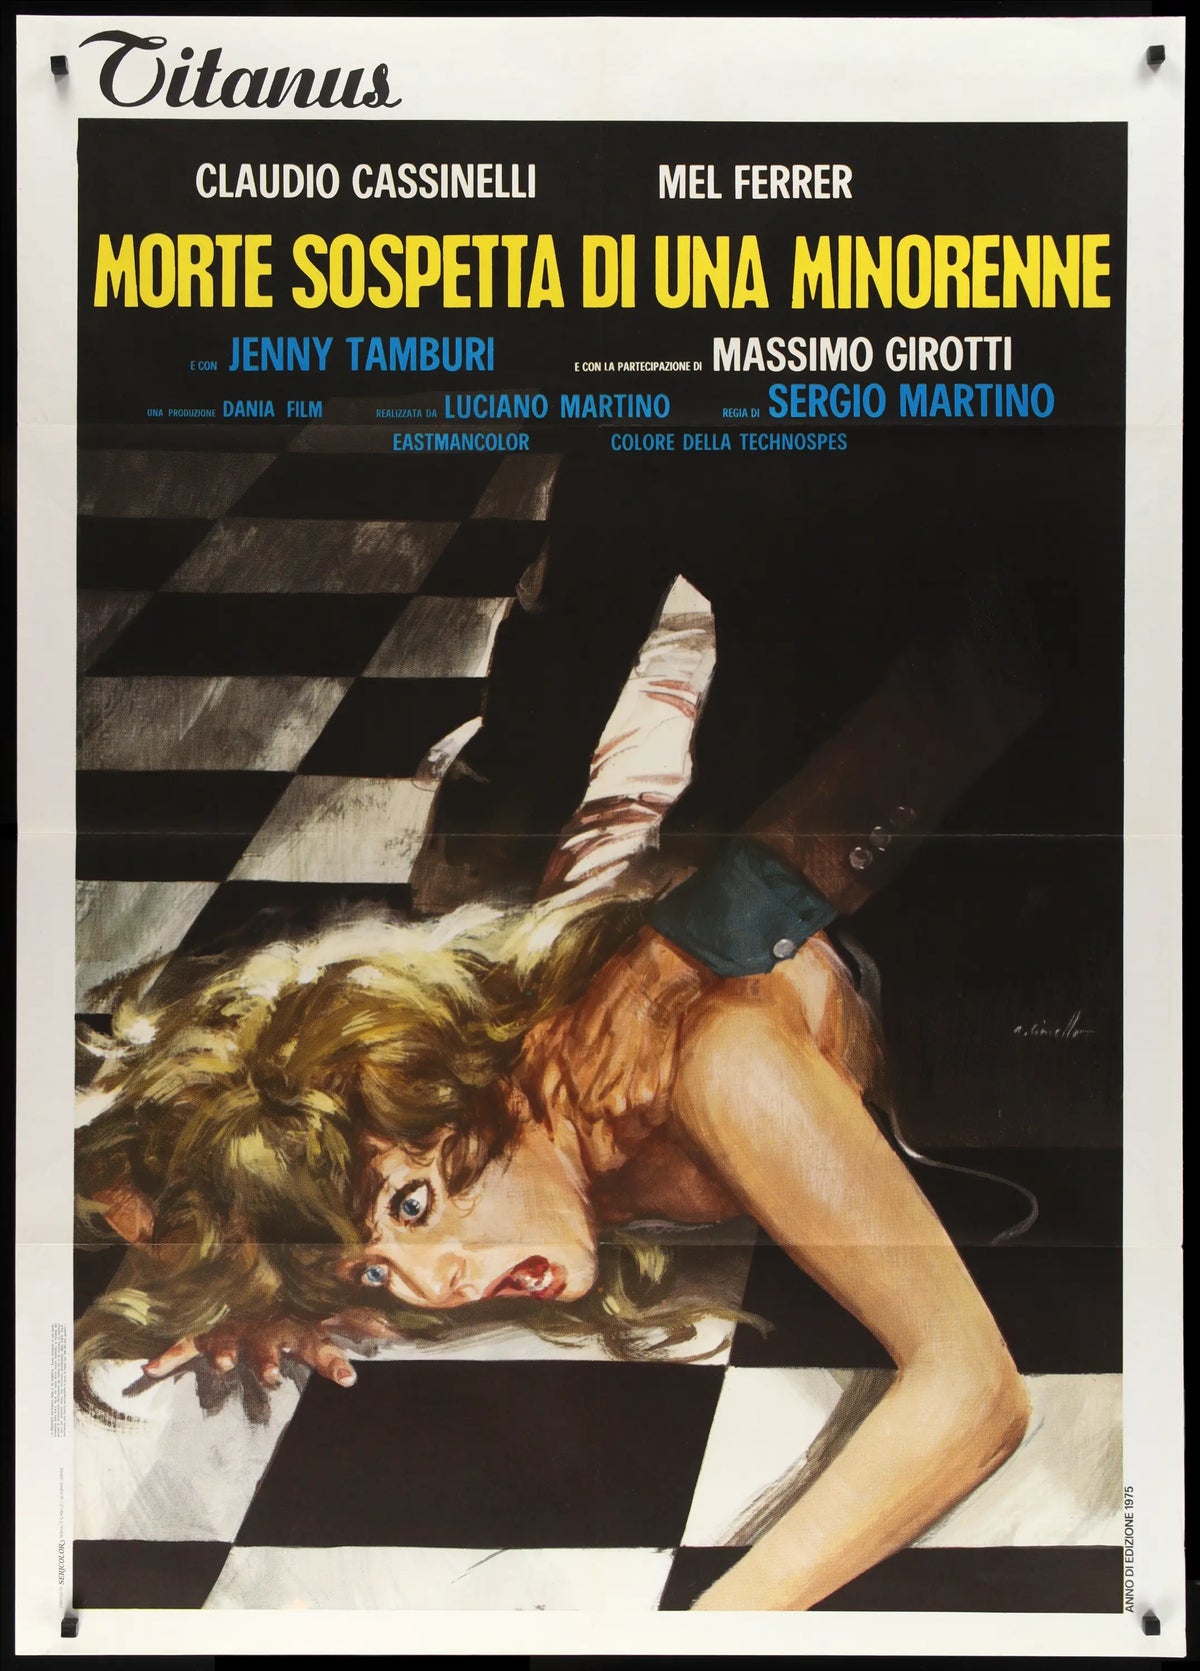 Suspicious Death of a Minor (1975) original movie poster for sale at Original Film Art